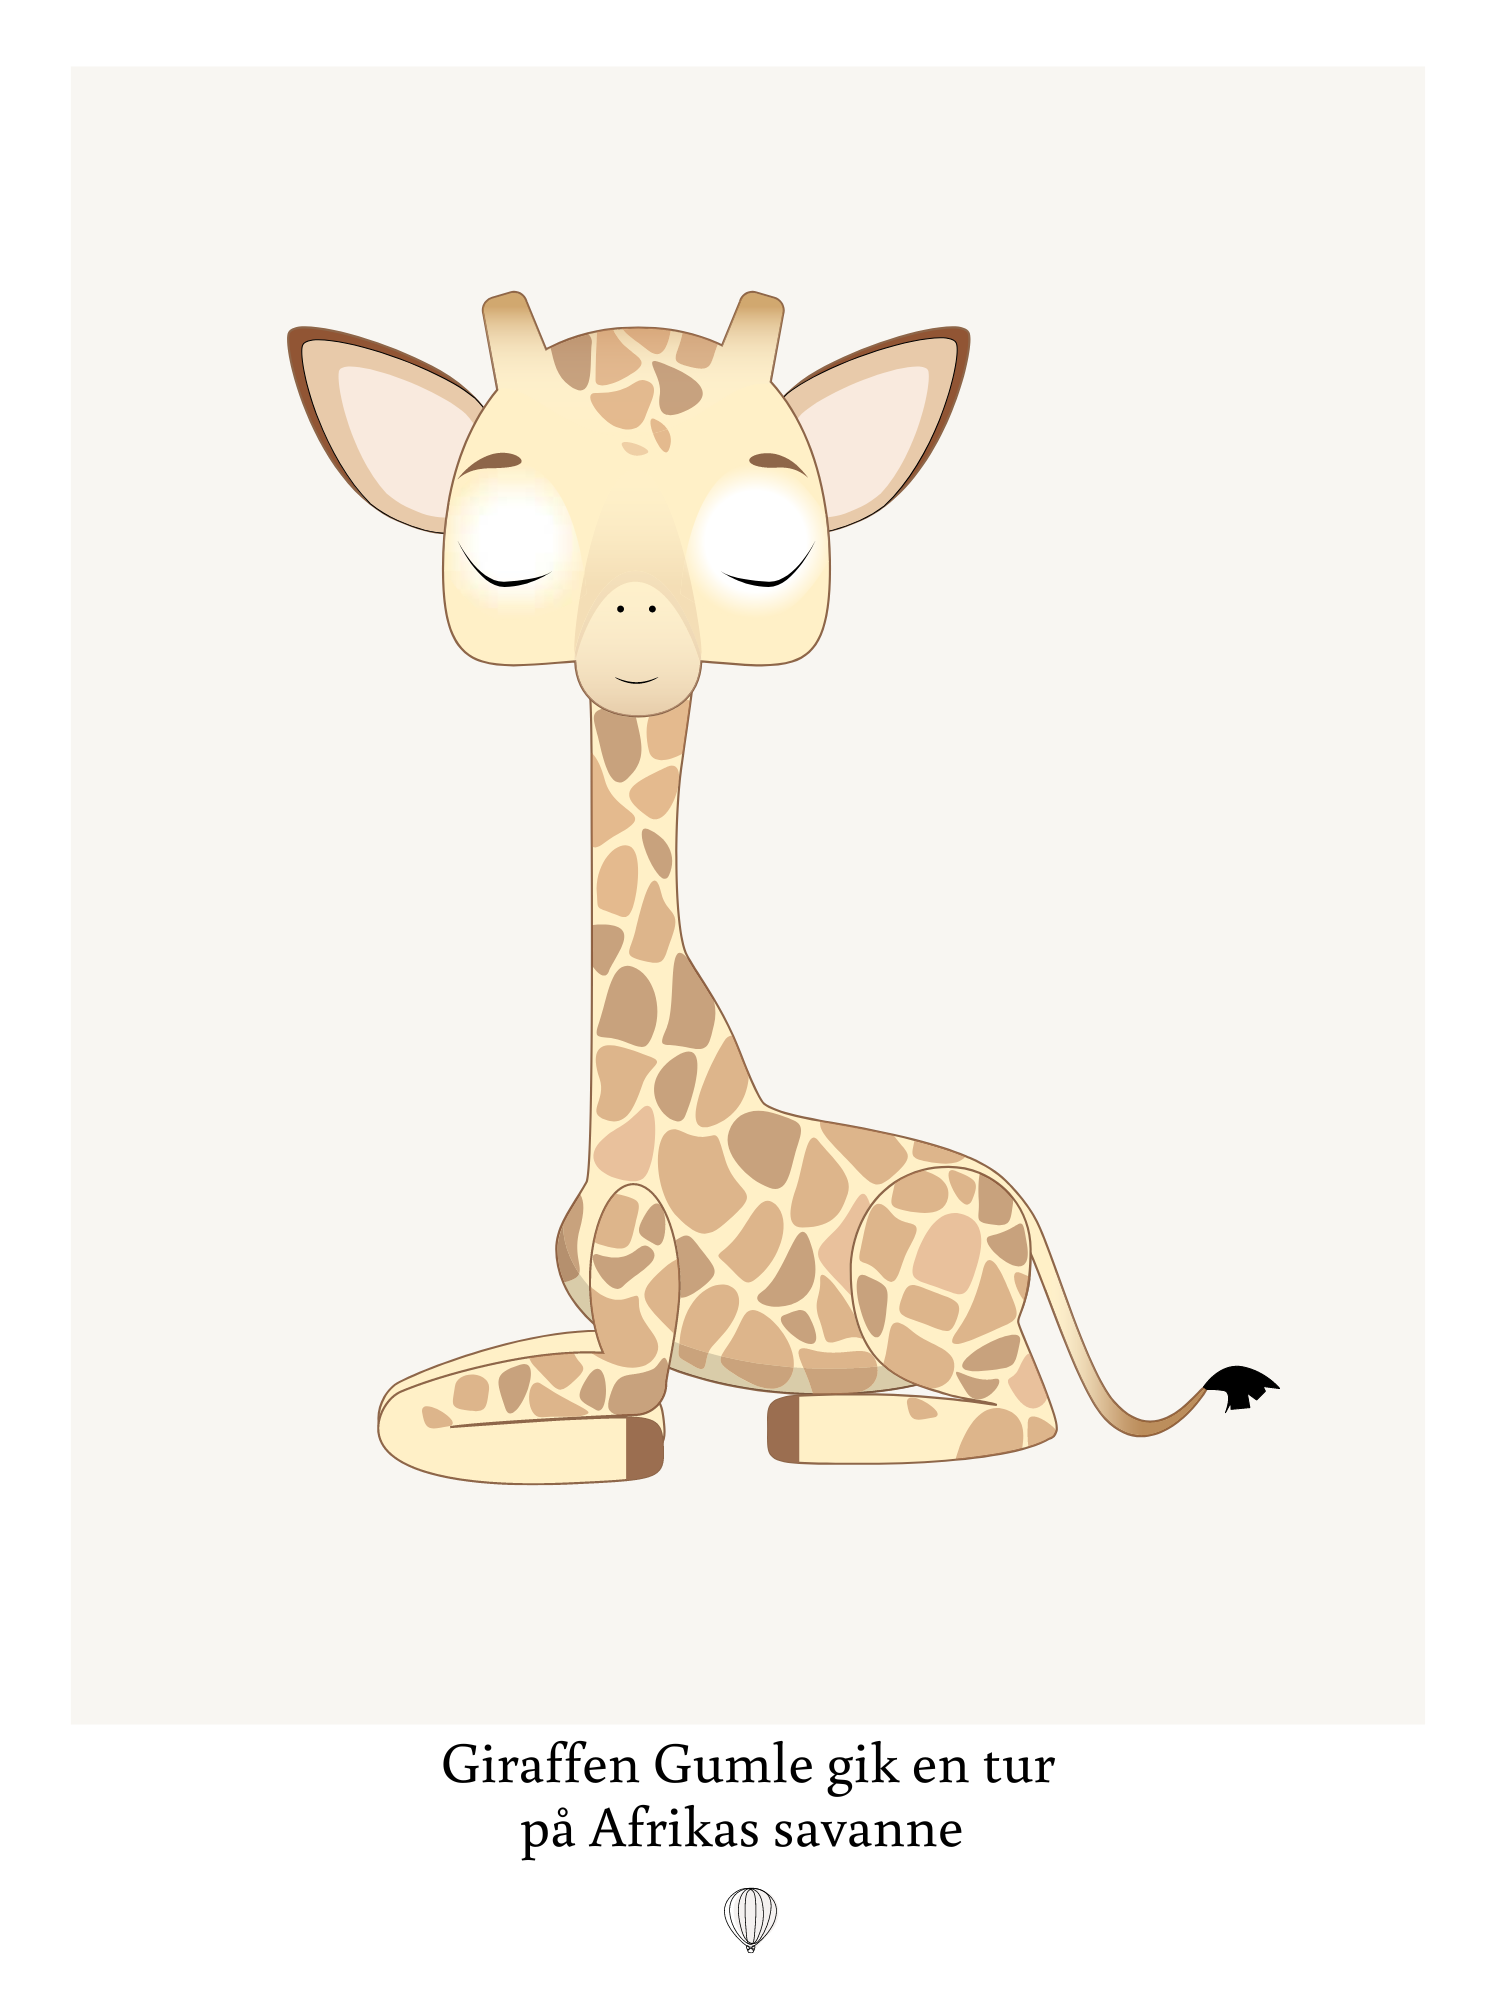 "Giraffen Gumle"